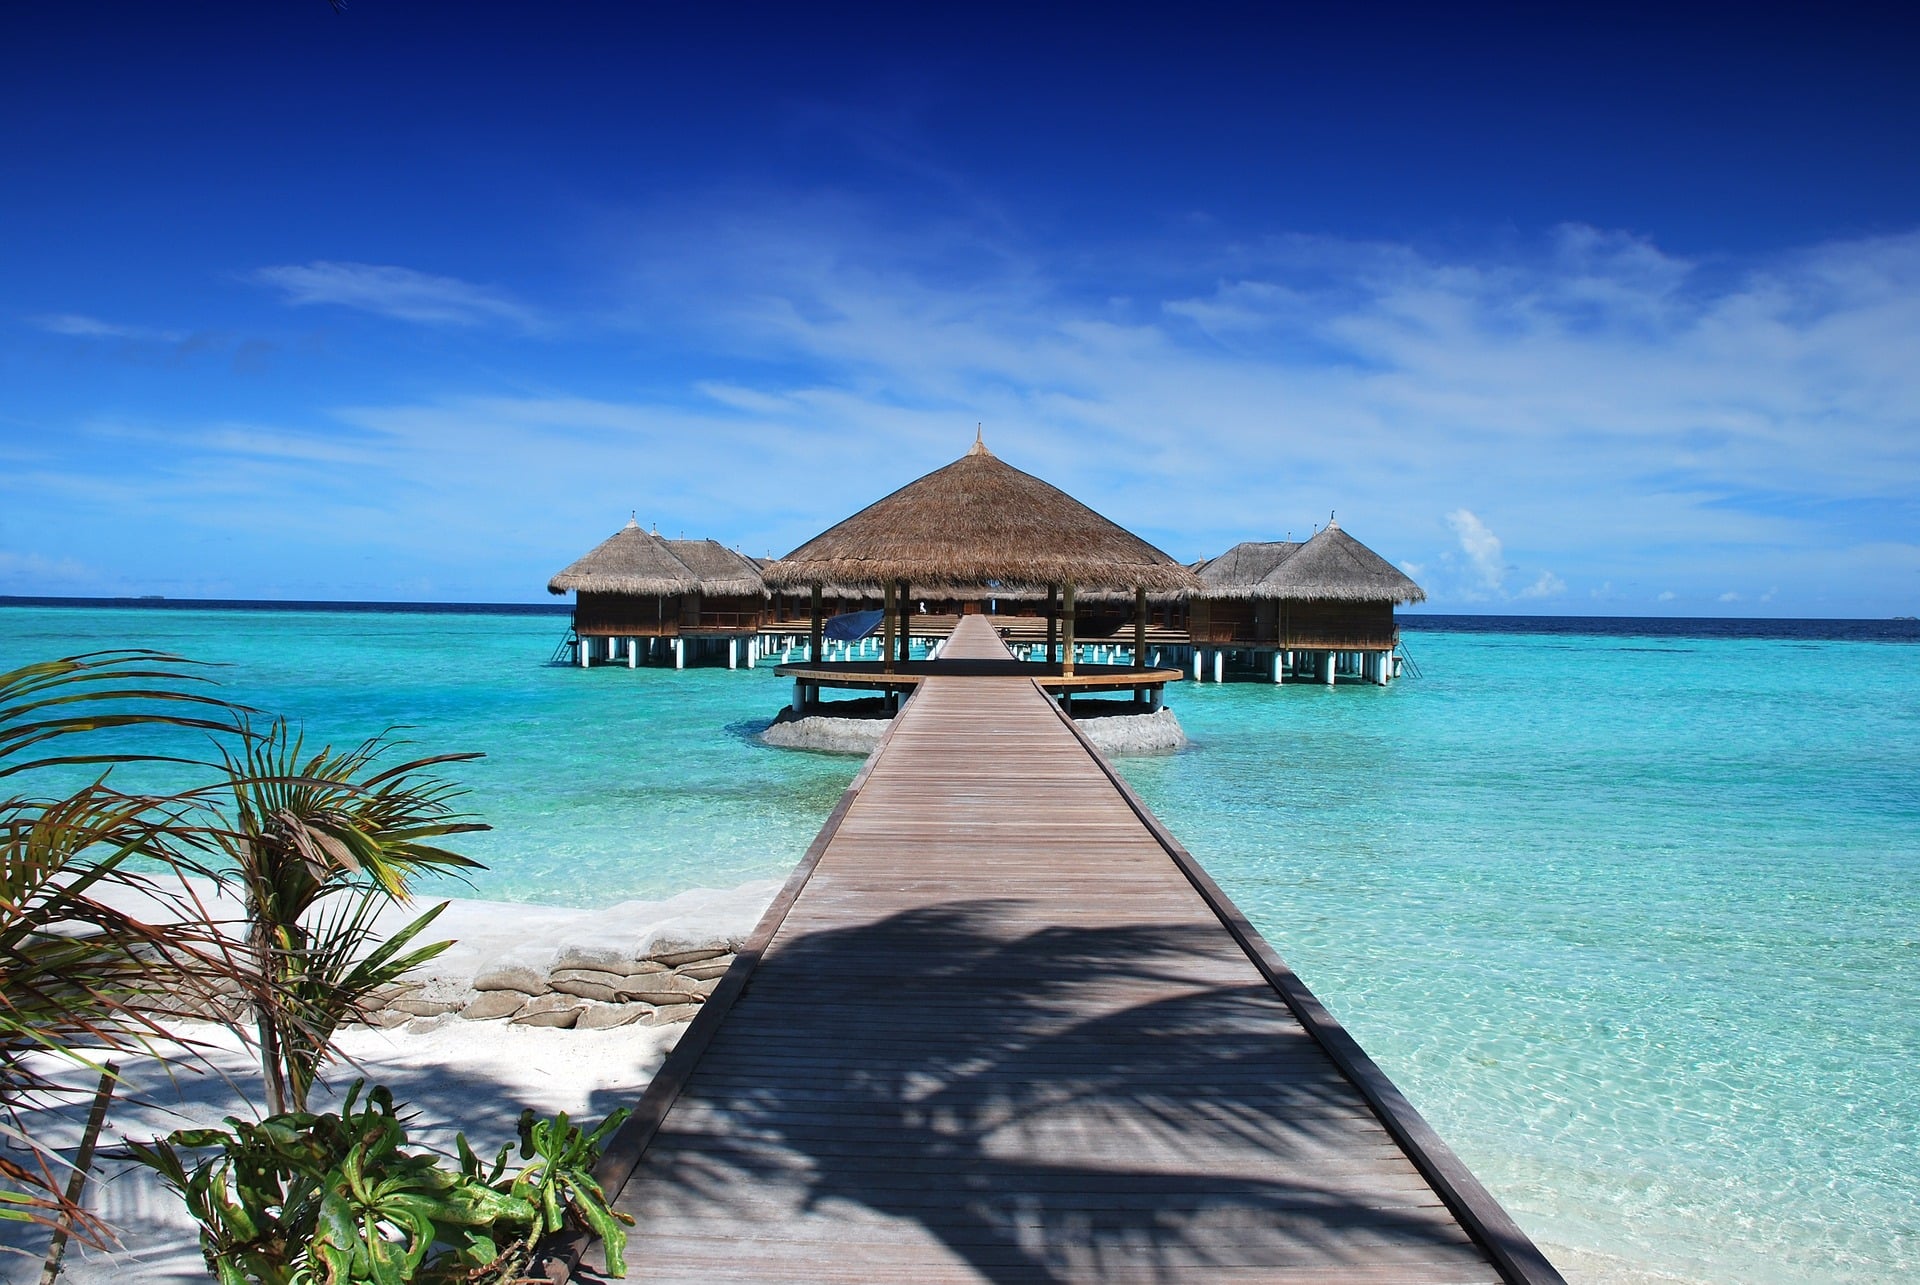 Traveling Maldives on a budget - Accommodation on water